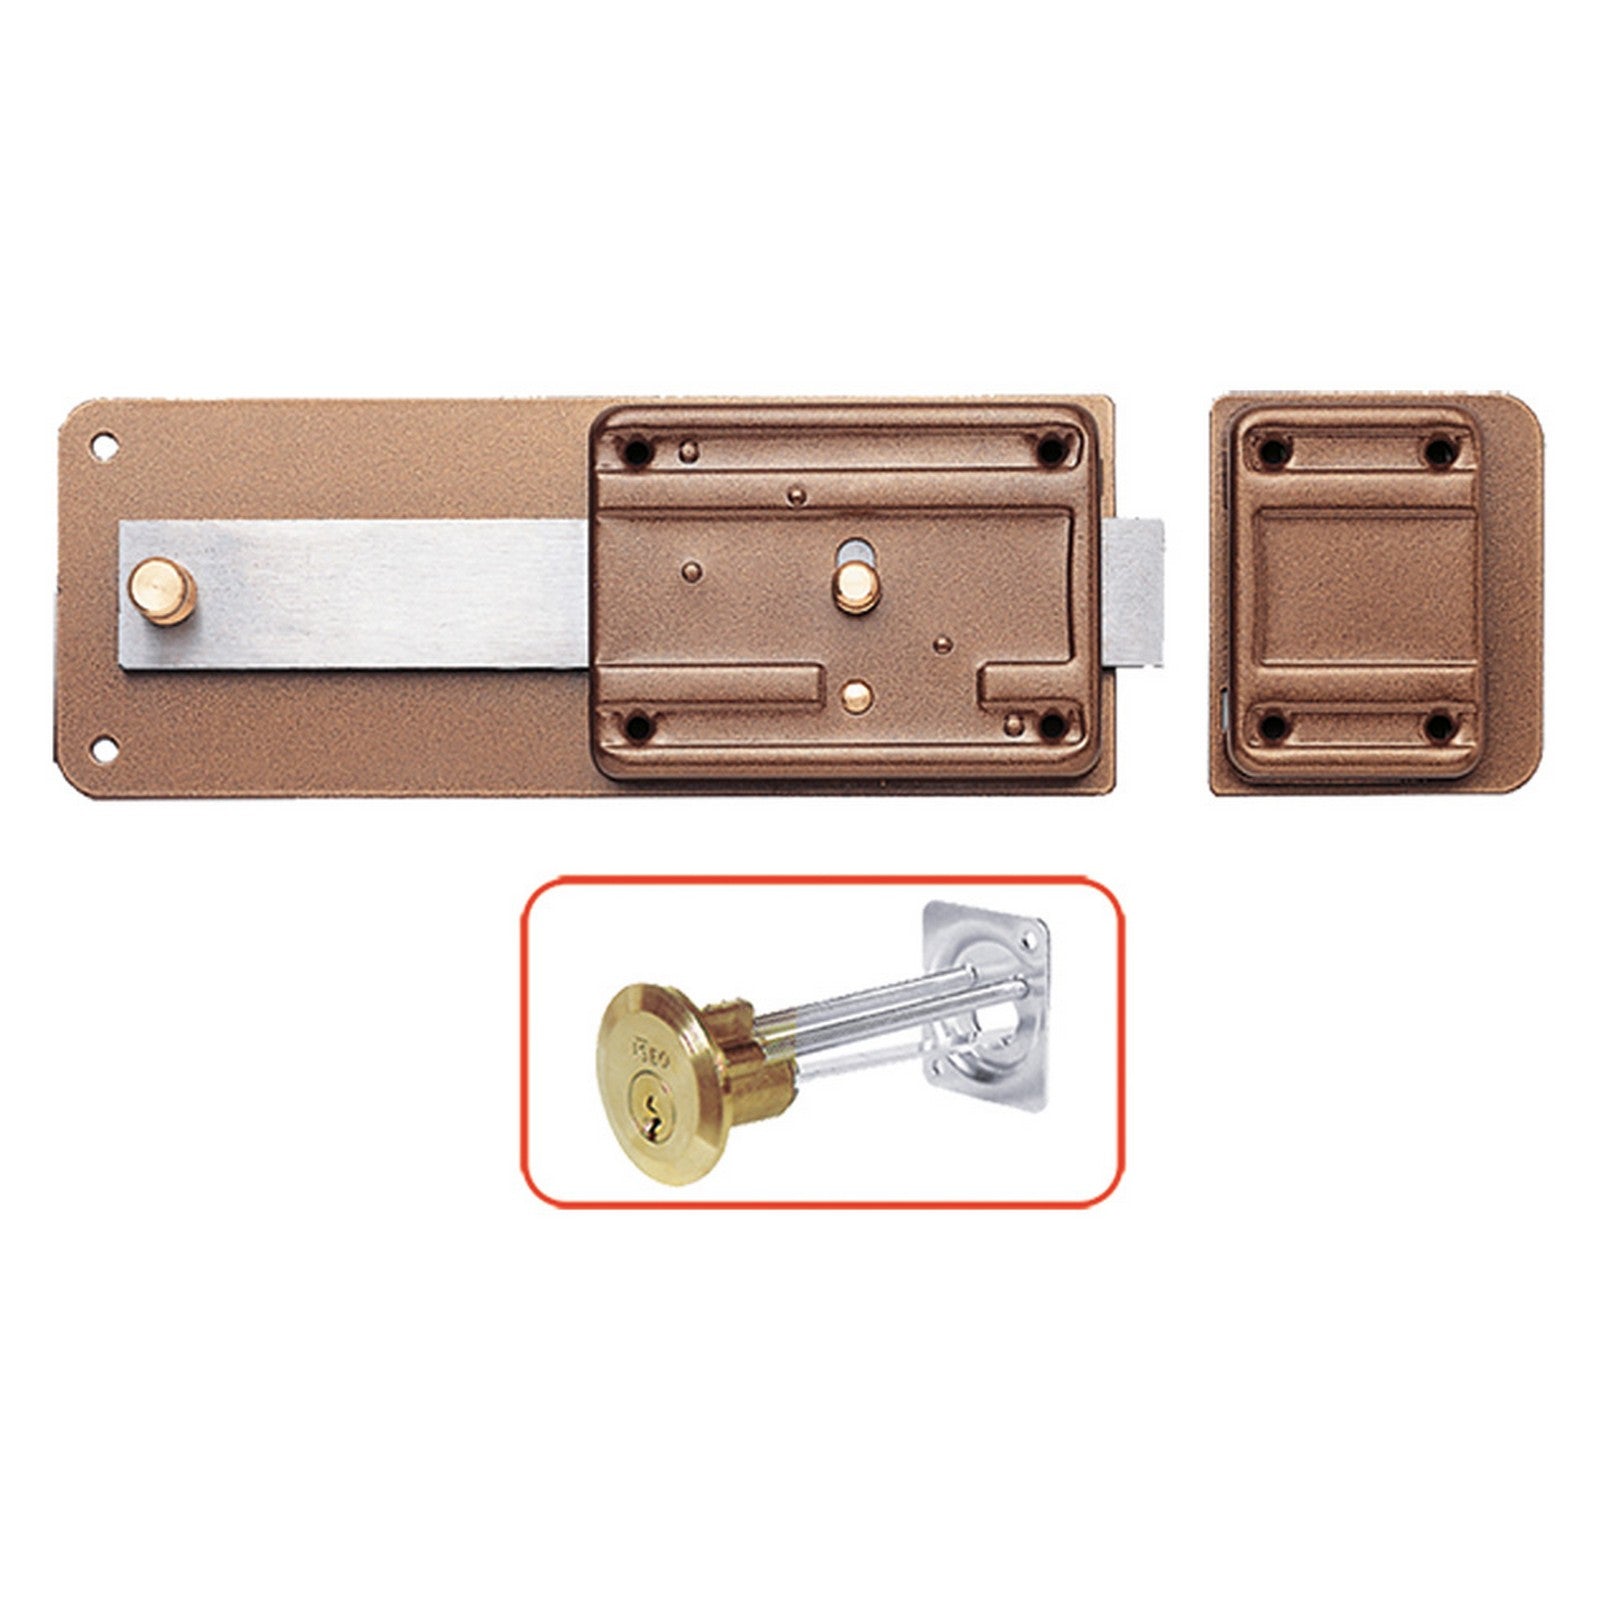 2pz serratura ferroglietto da applicare art. 320 5 1/2 mandate - e 60 cod:ferx.301738nlm